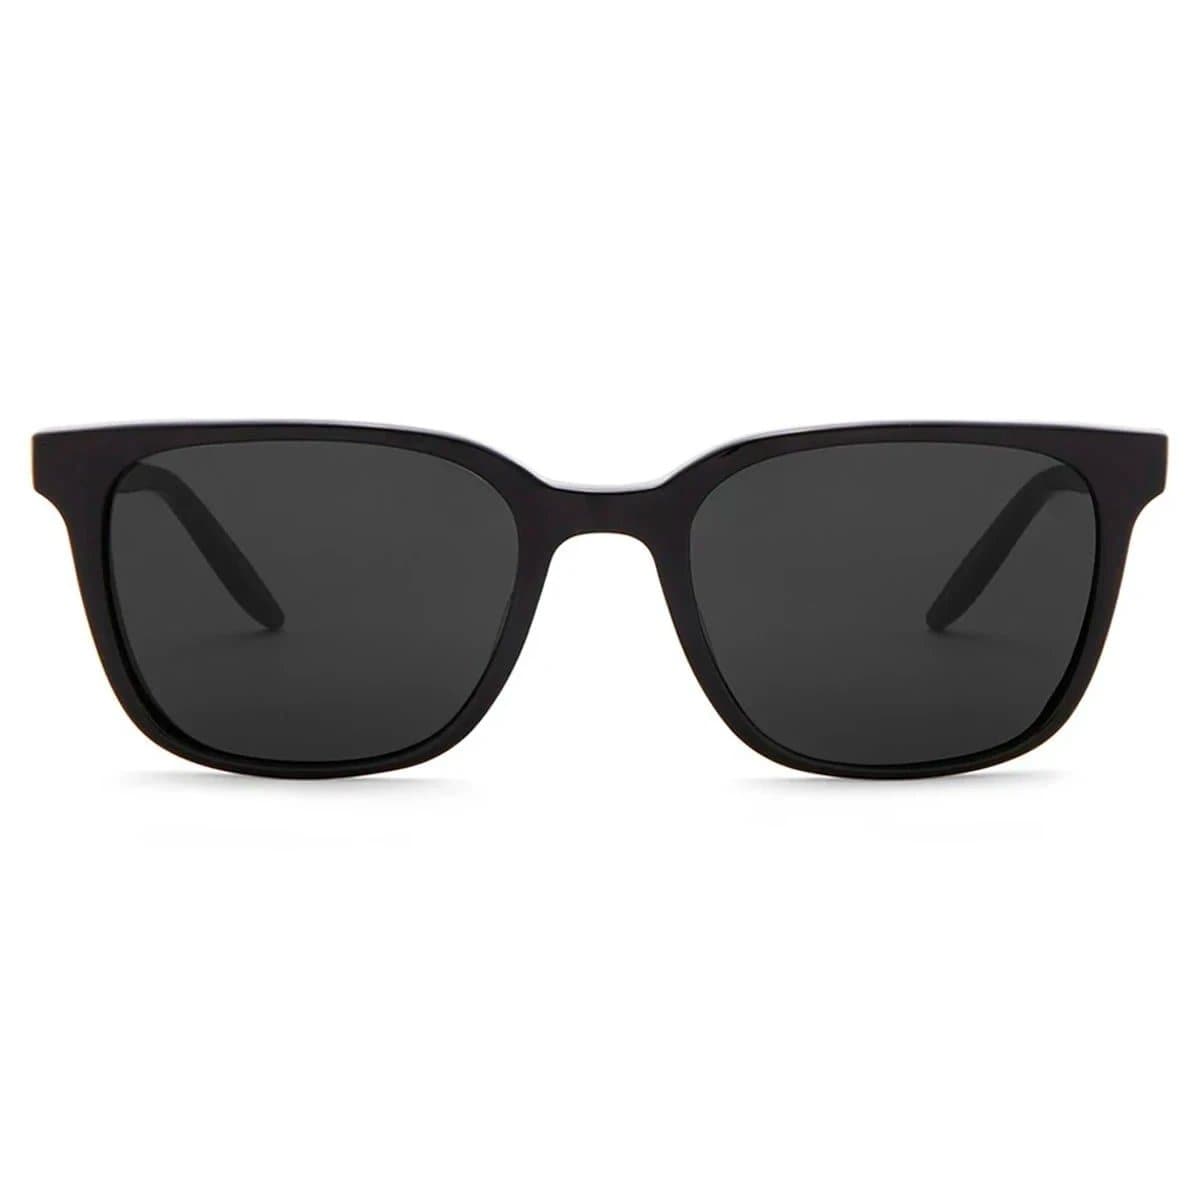 007 sunglasses